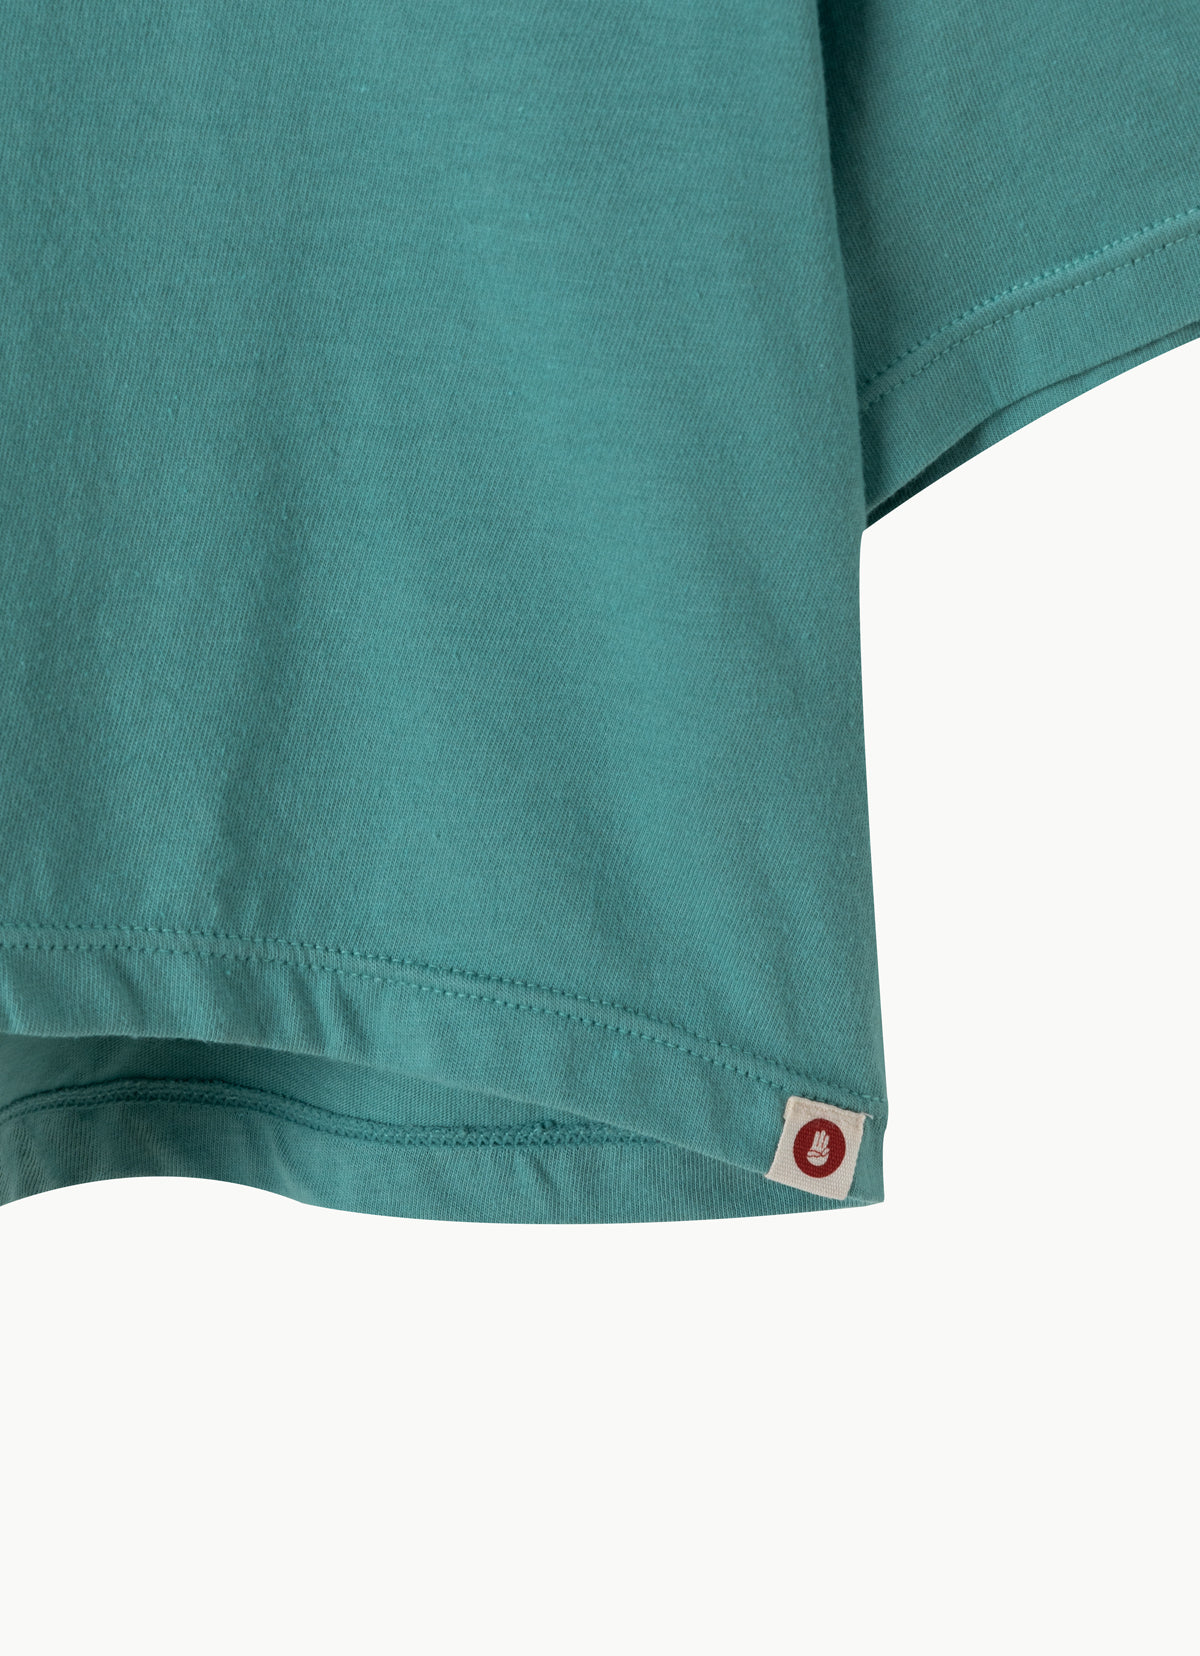 Medio short sleeve (Modal ver.)_Dusty Turquoise